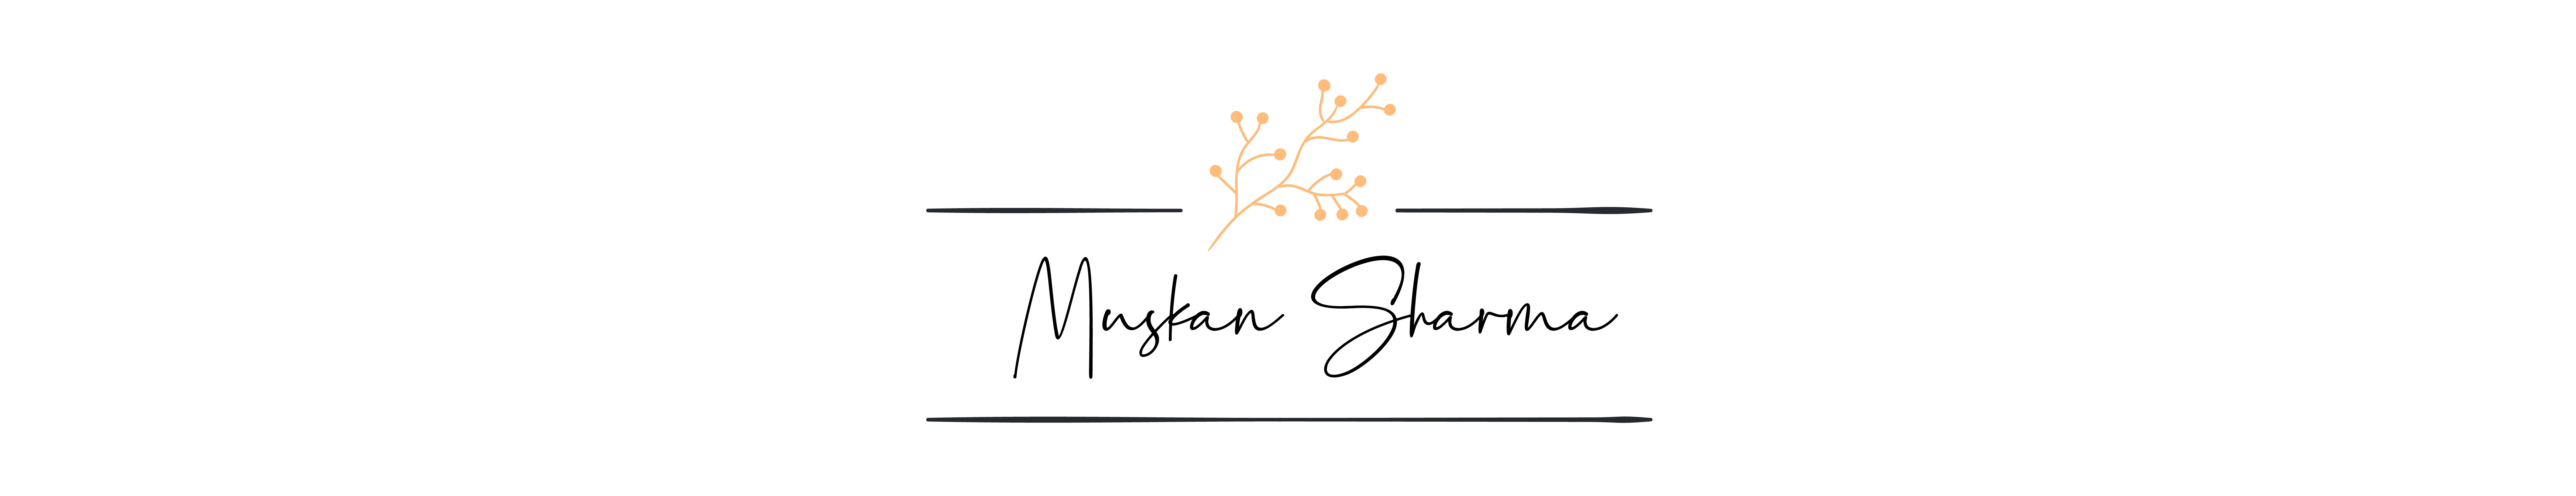 Muskan Sharmas profilbanner